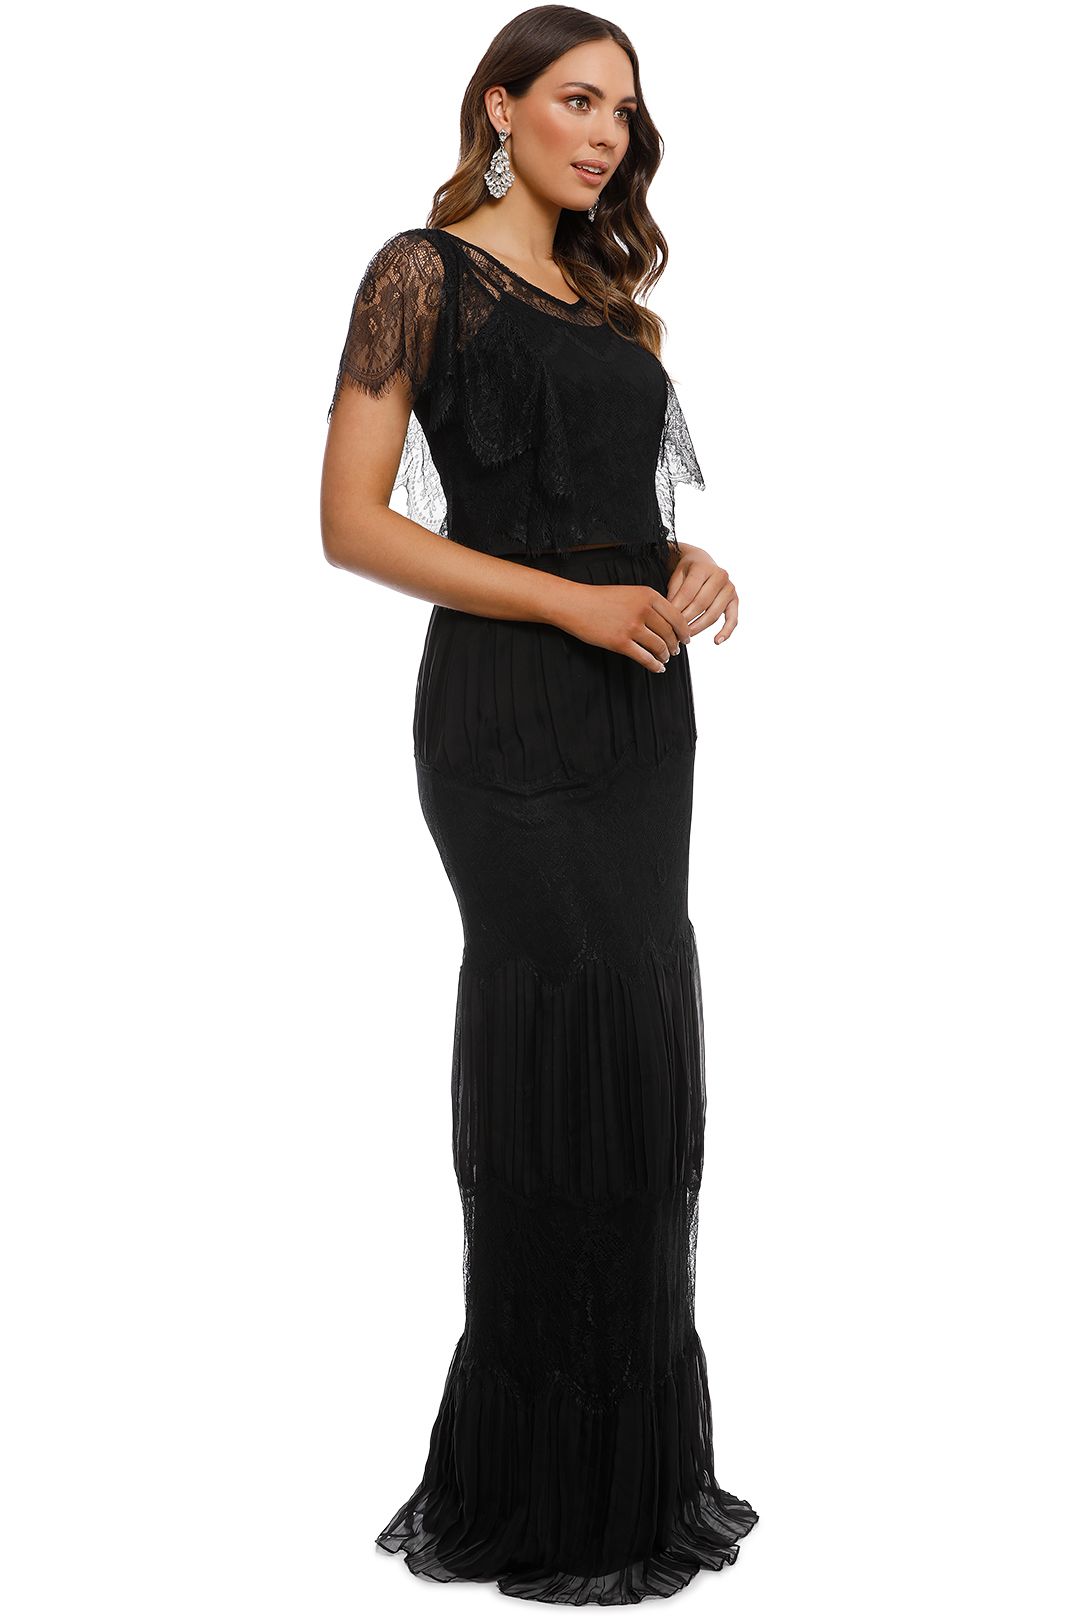 Tania Olsen - Clara Evening Gown - Black - Side